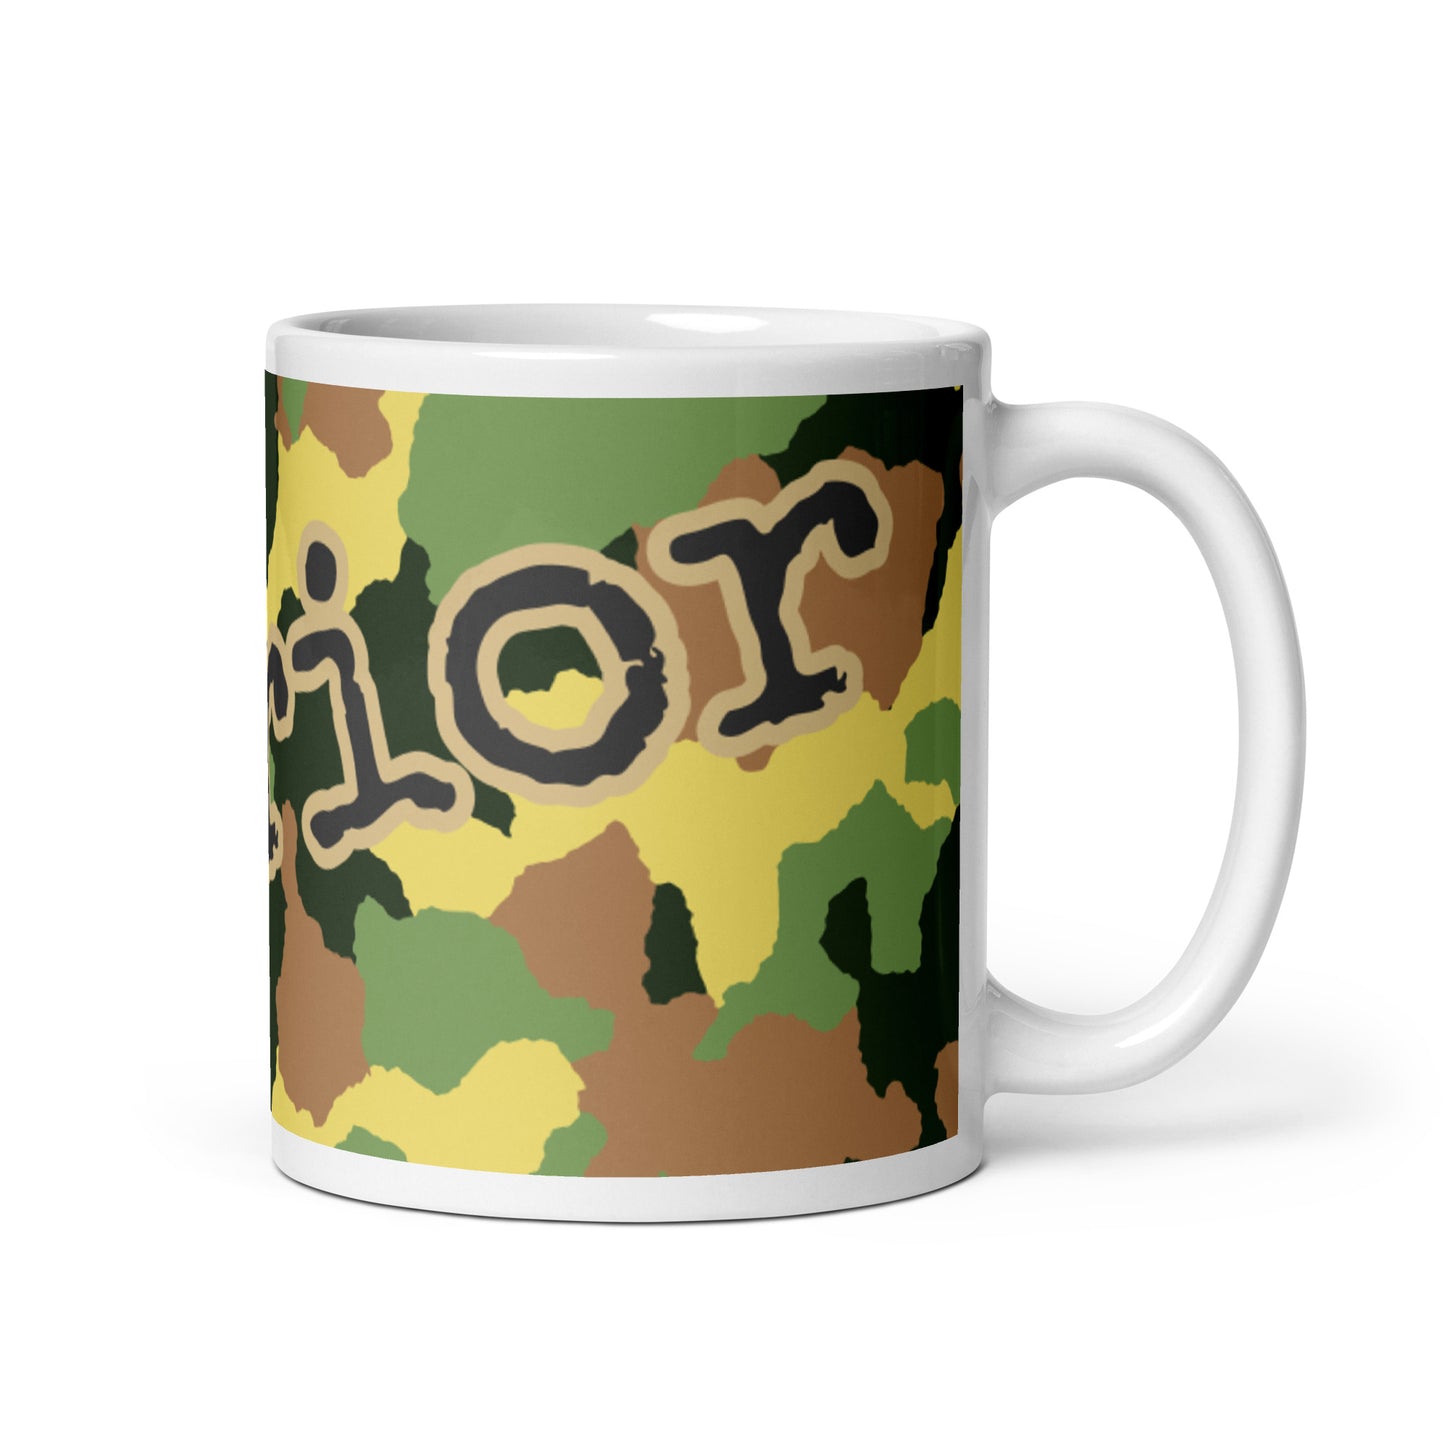 Army Camo White Glossy Mug - Warrior